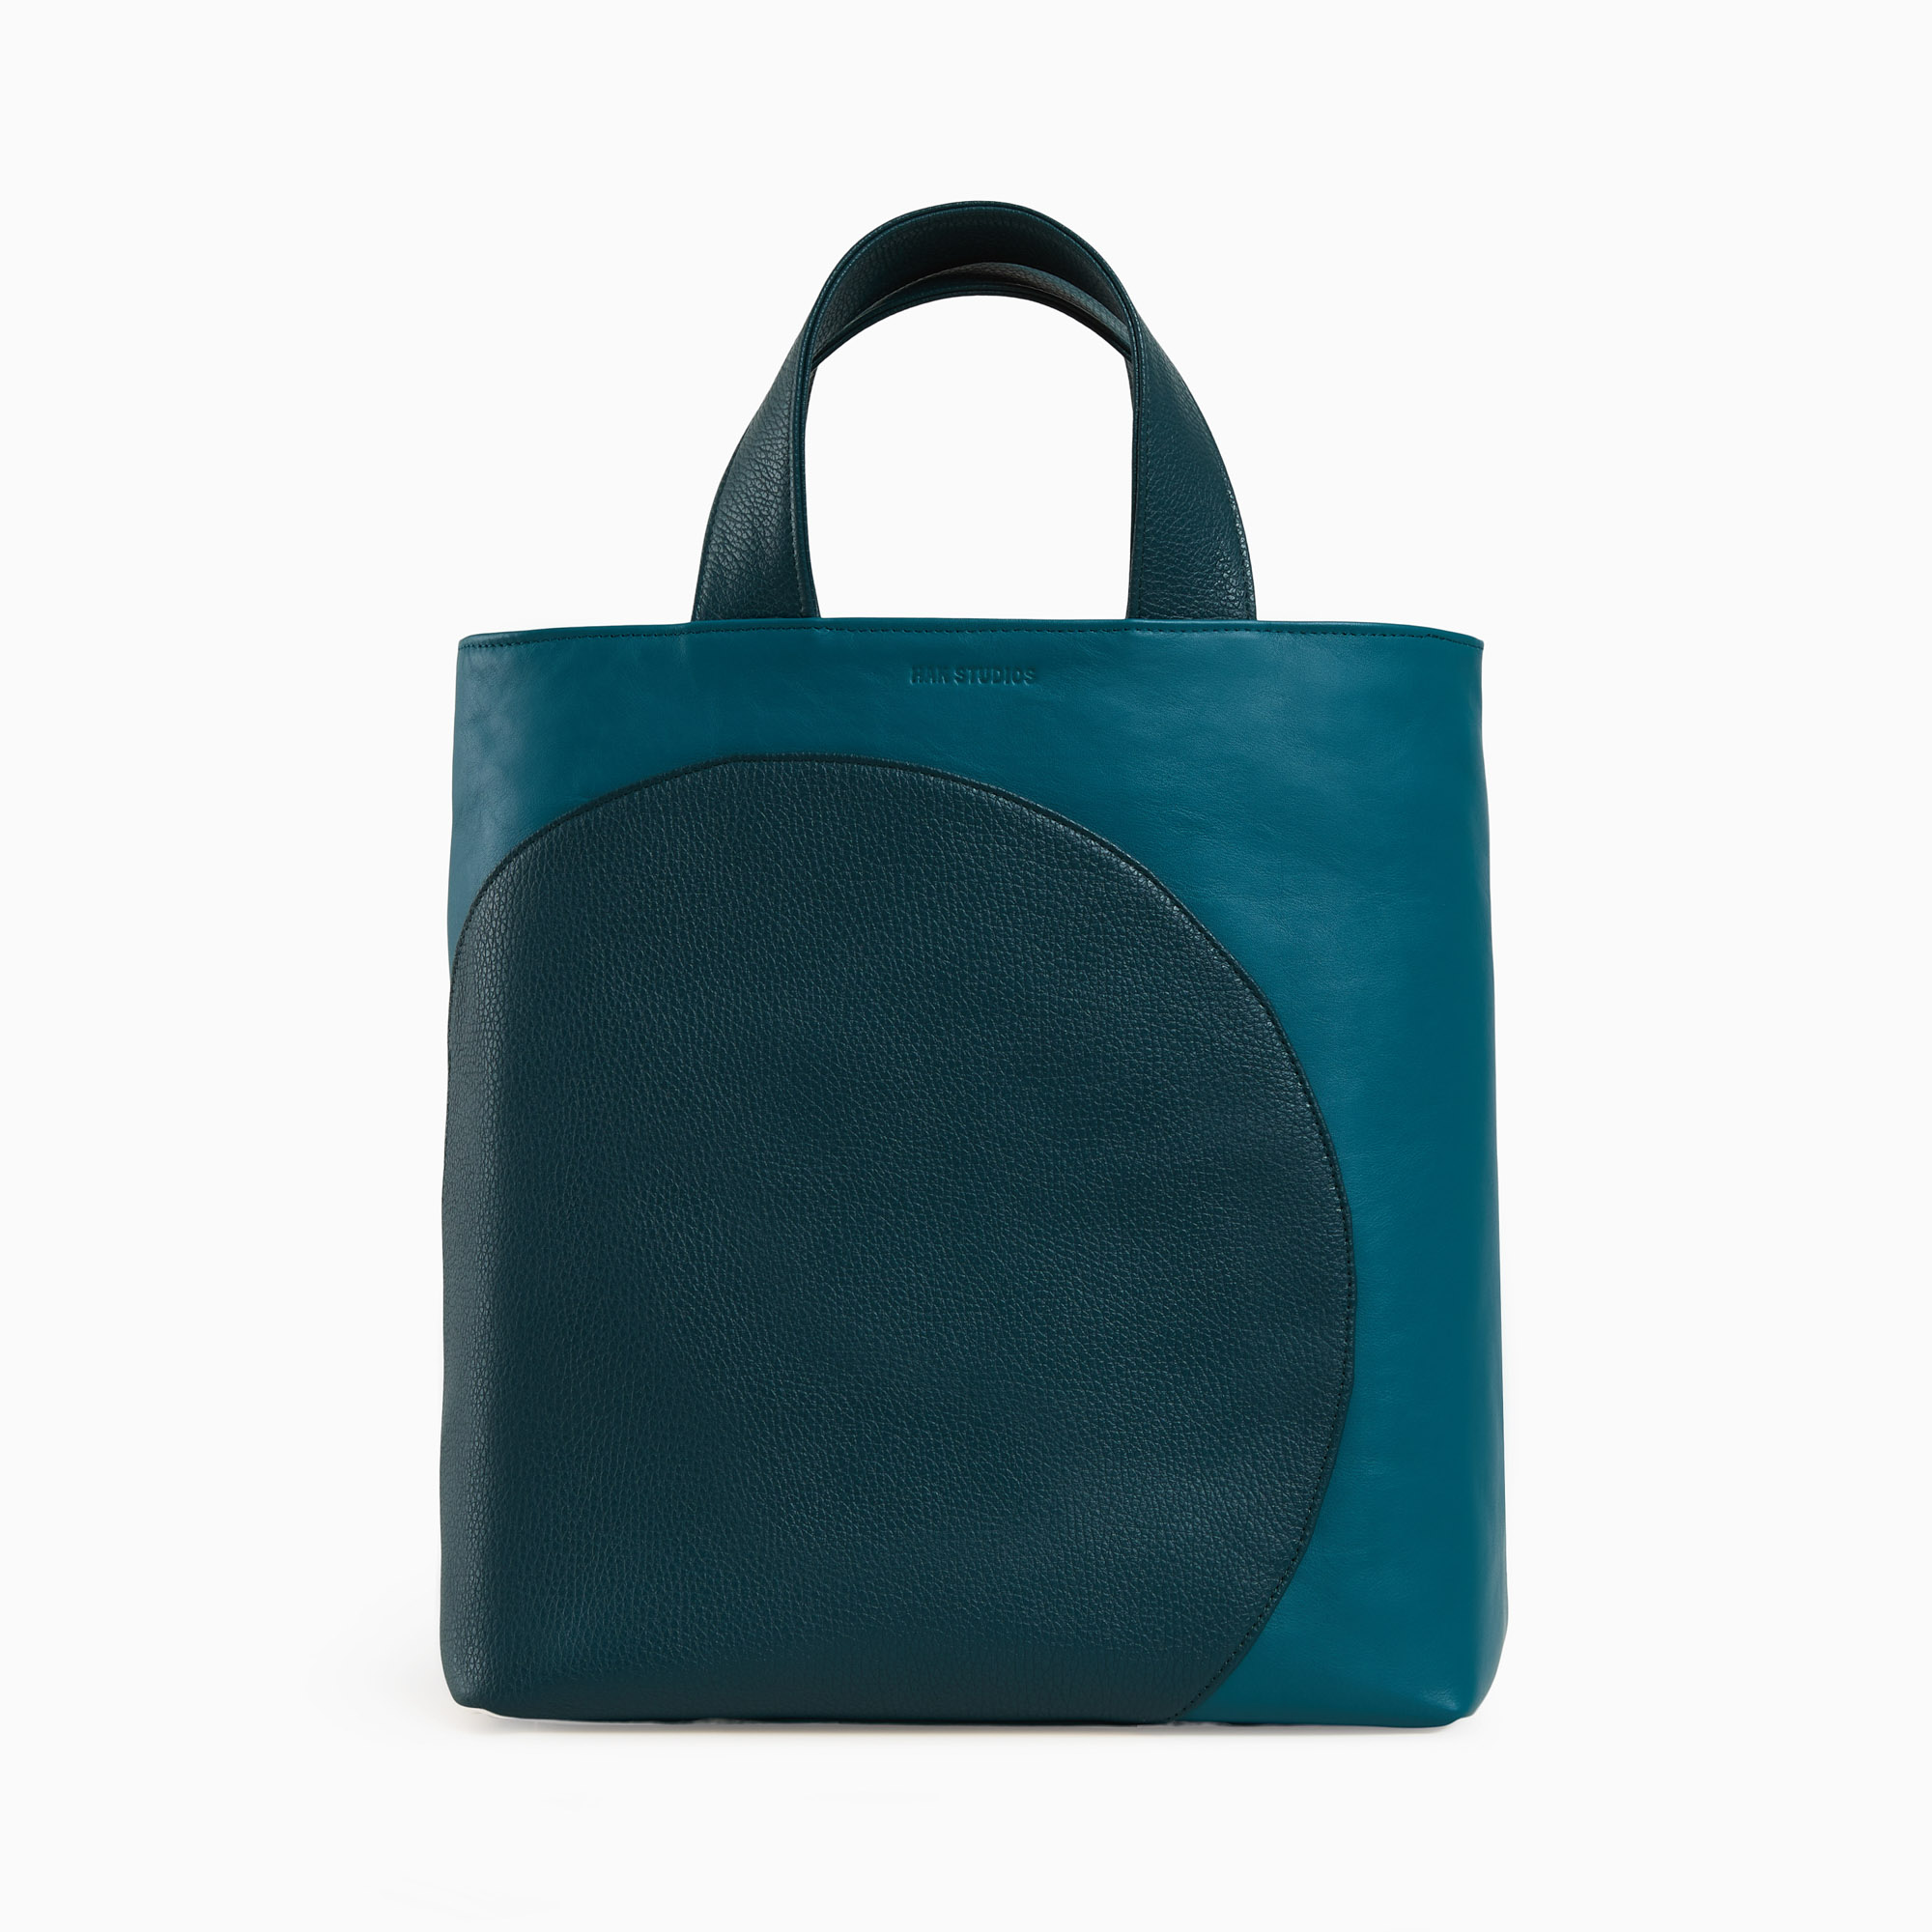 Leather handbag in blue shades